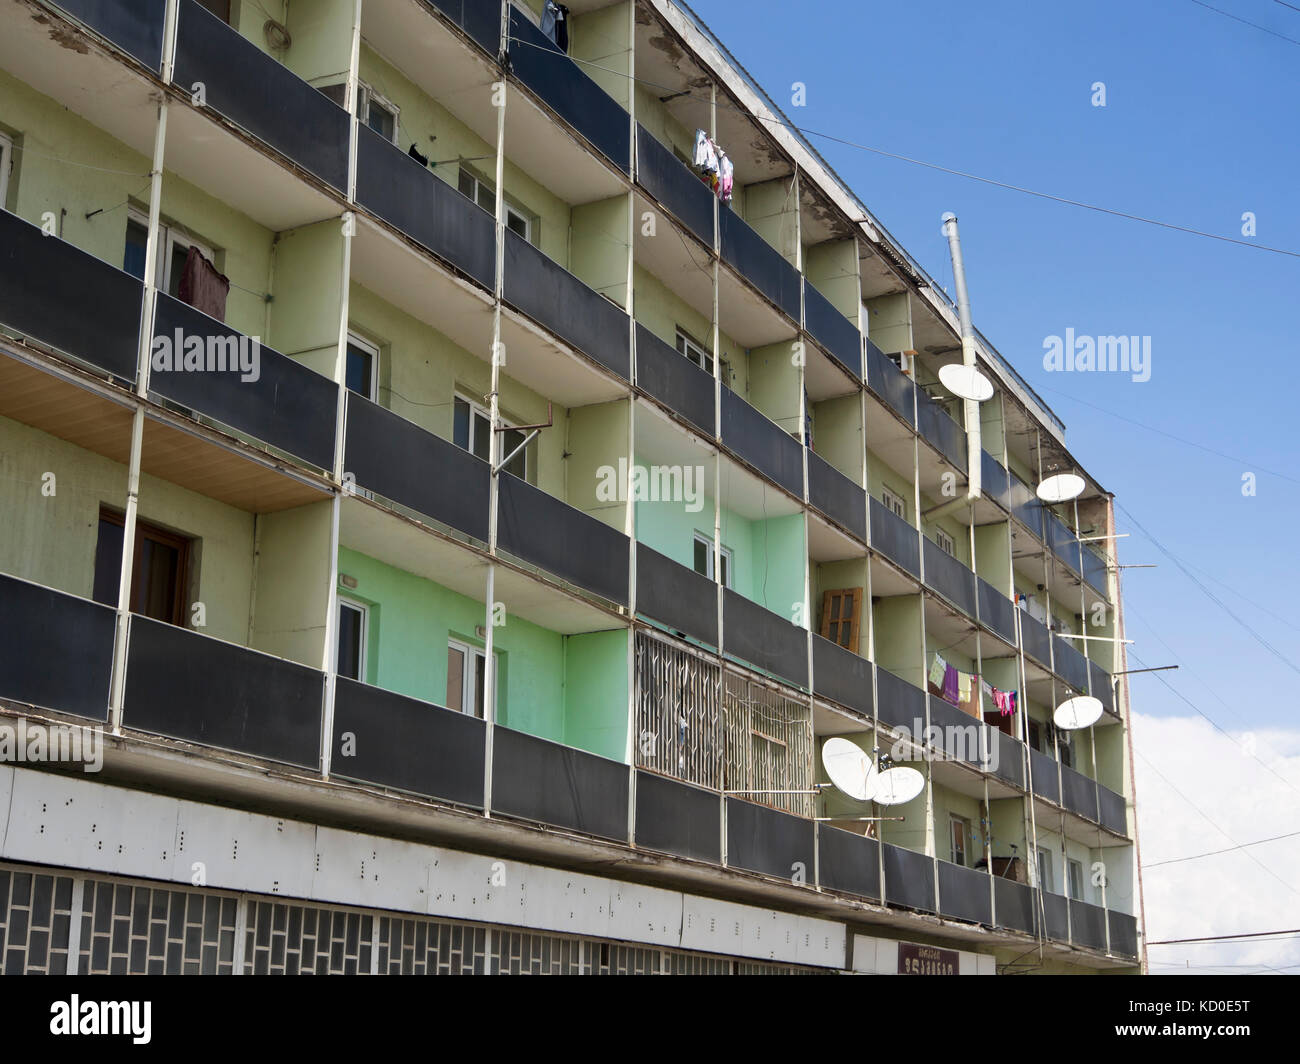 Apartment block in Gori Georgia from Soviet time, building in Khrushchyovka style Stock Photo